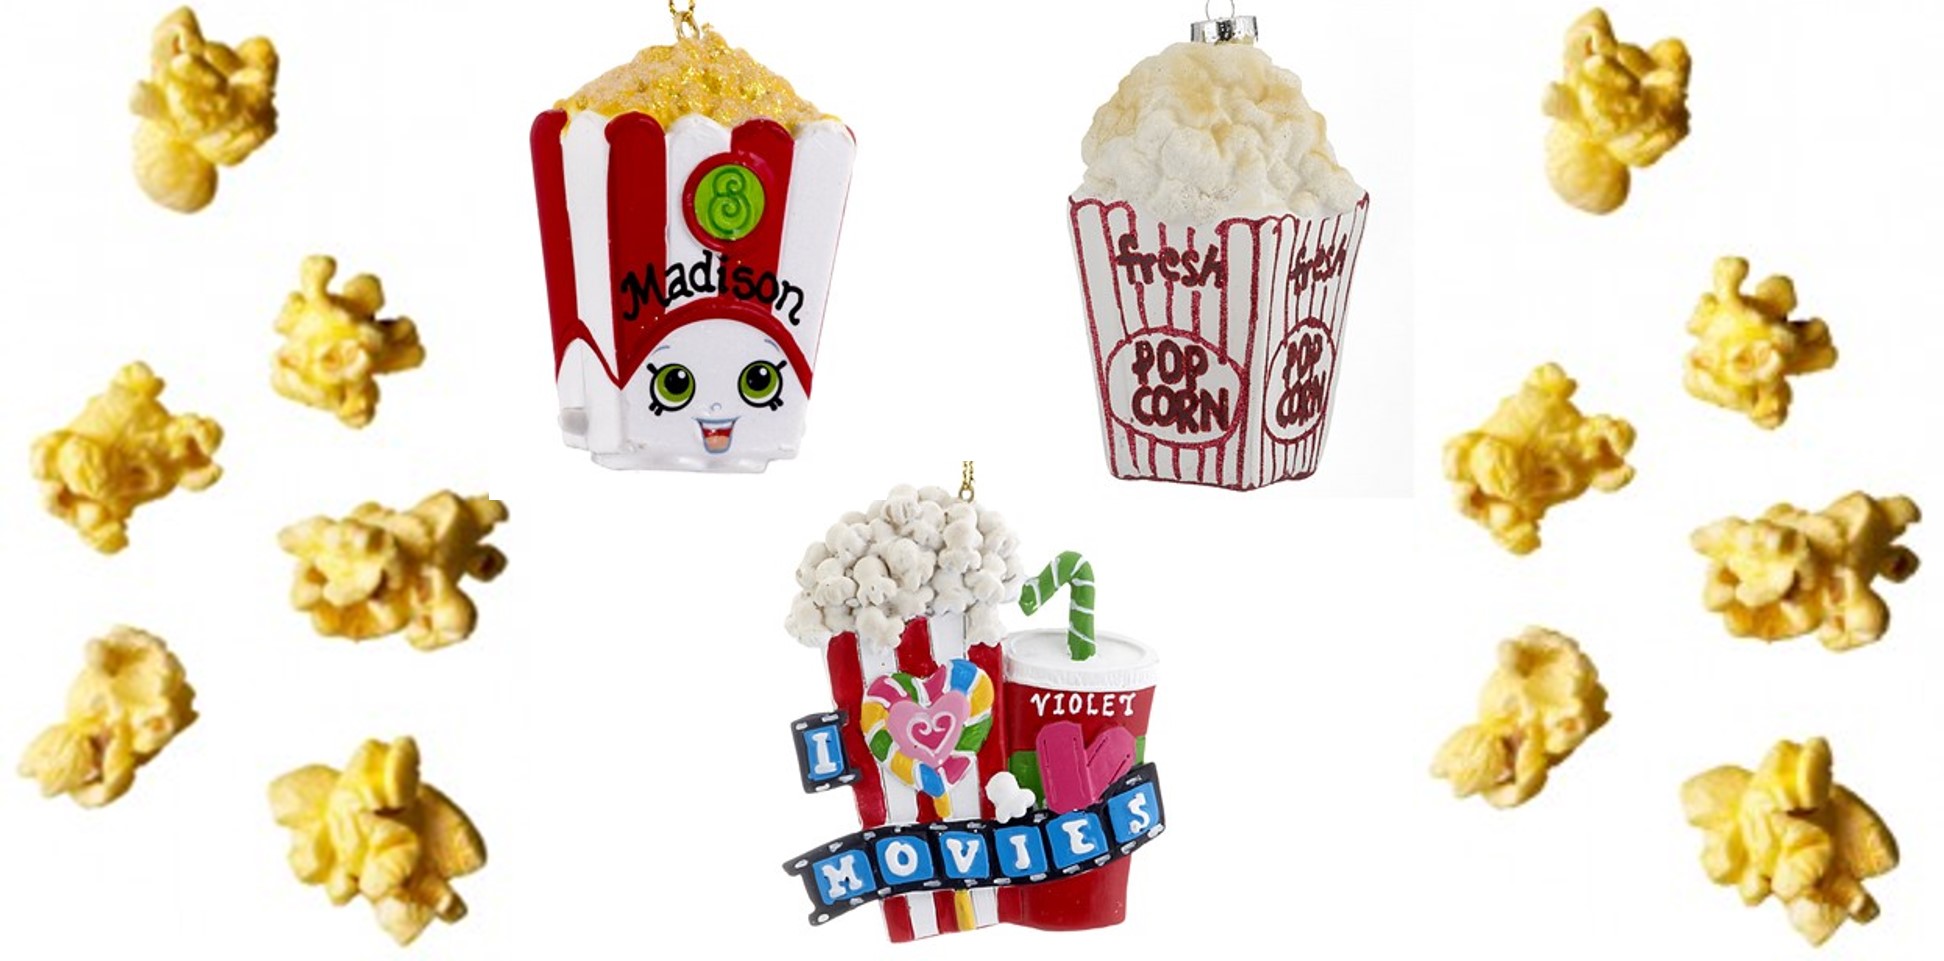 A collage of Popcorn Ornaments and Concession Stand symbols. | OrnamentShop.com